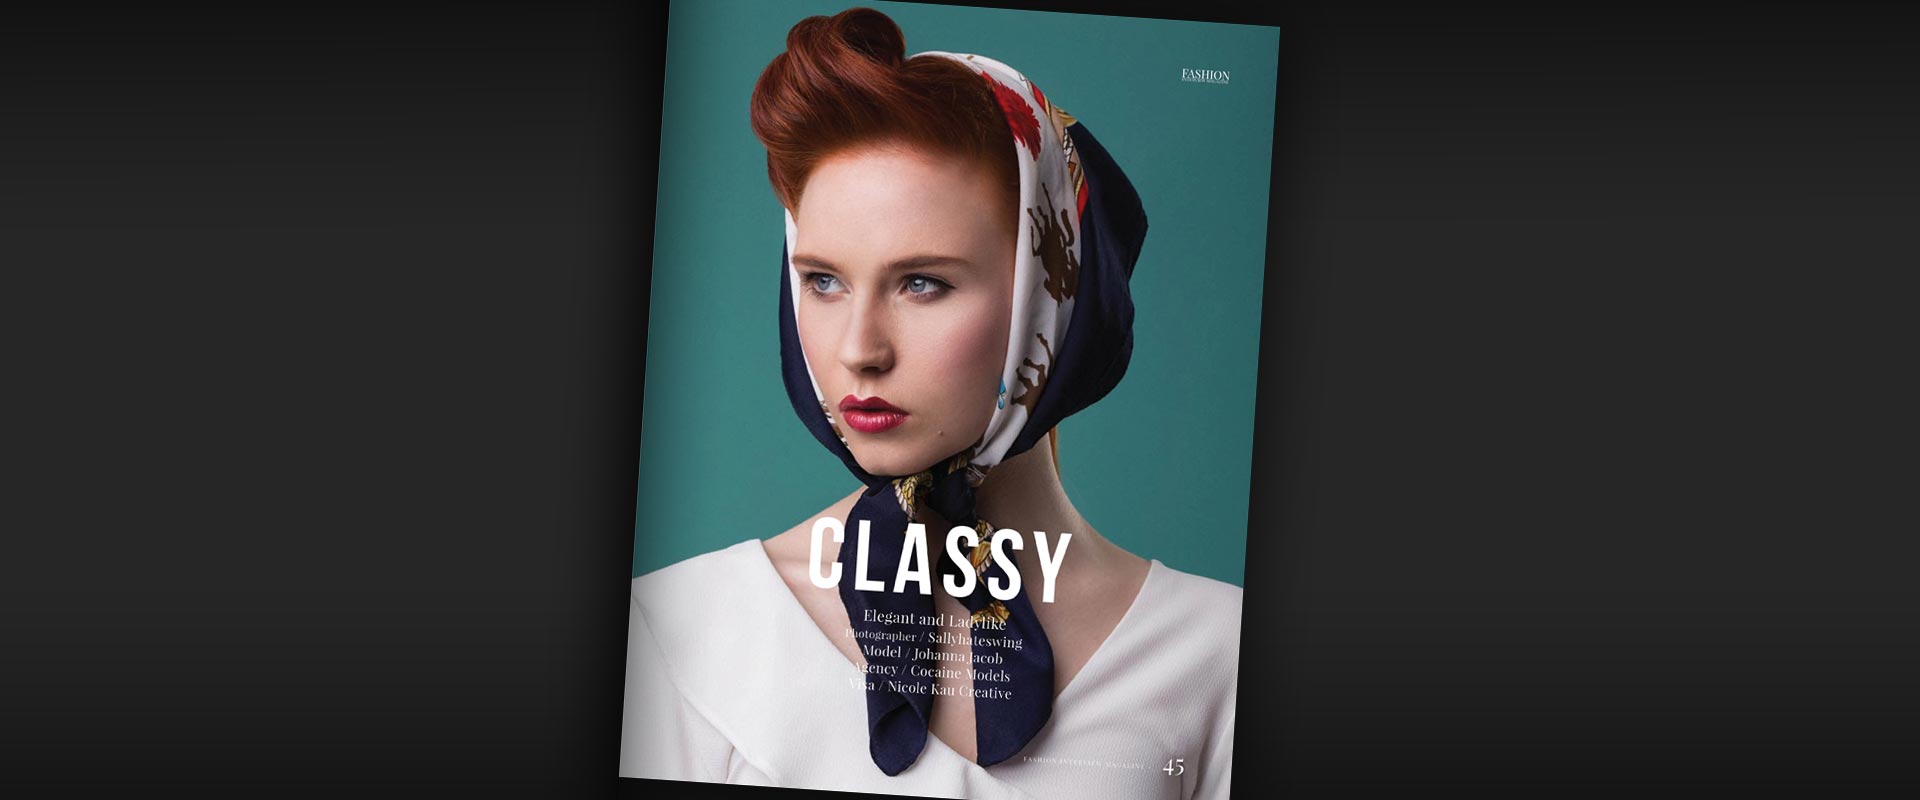 johanna-model-shooting-red-hair-blouse-tuch-eye-beauty-fashion-editorial-cover-titel